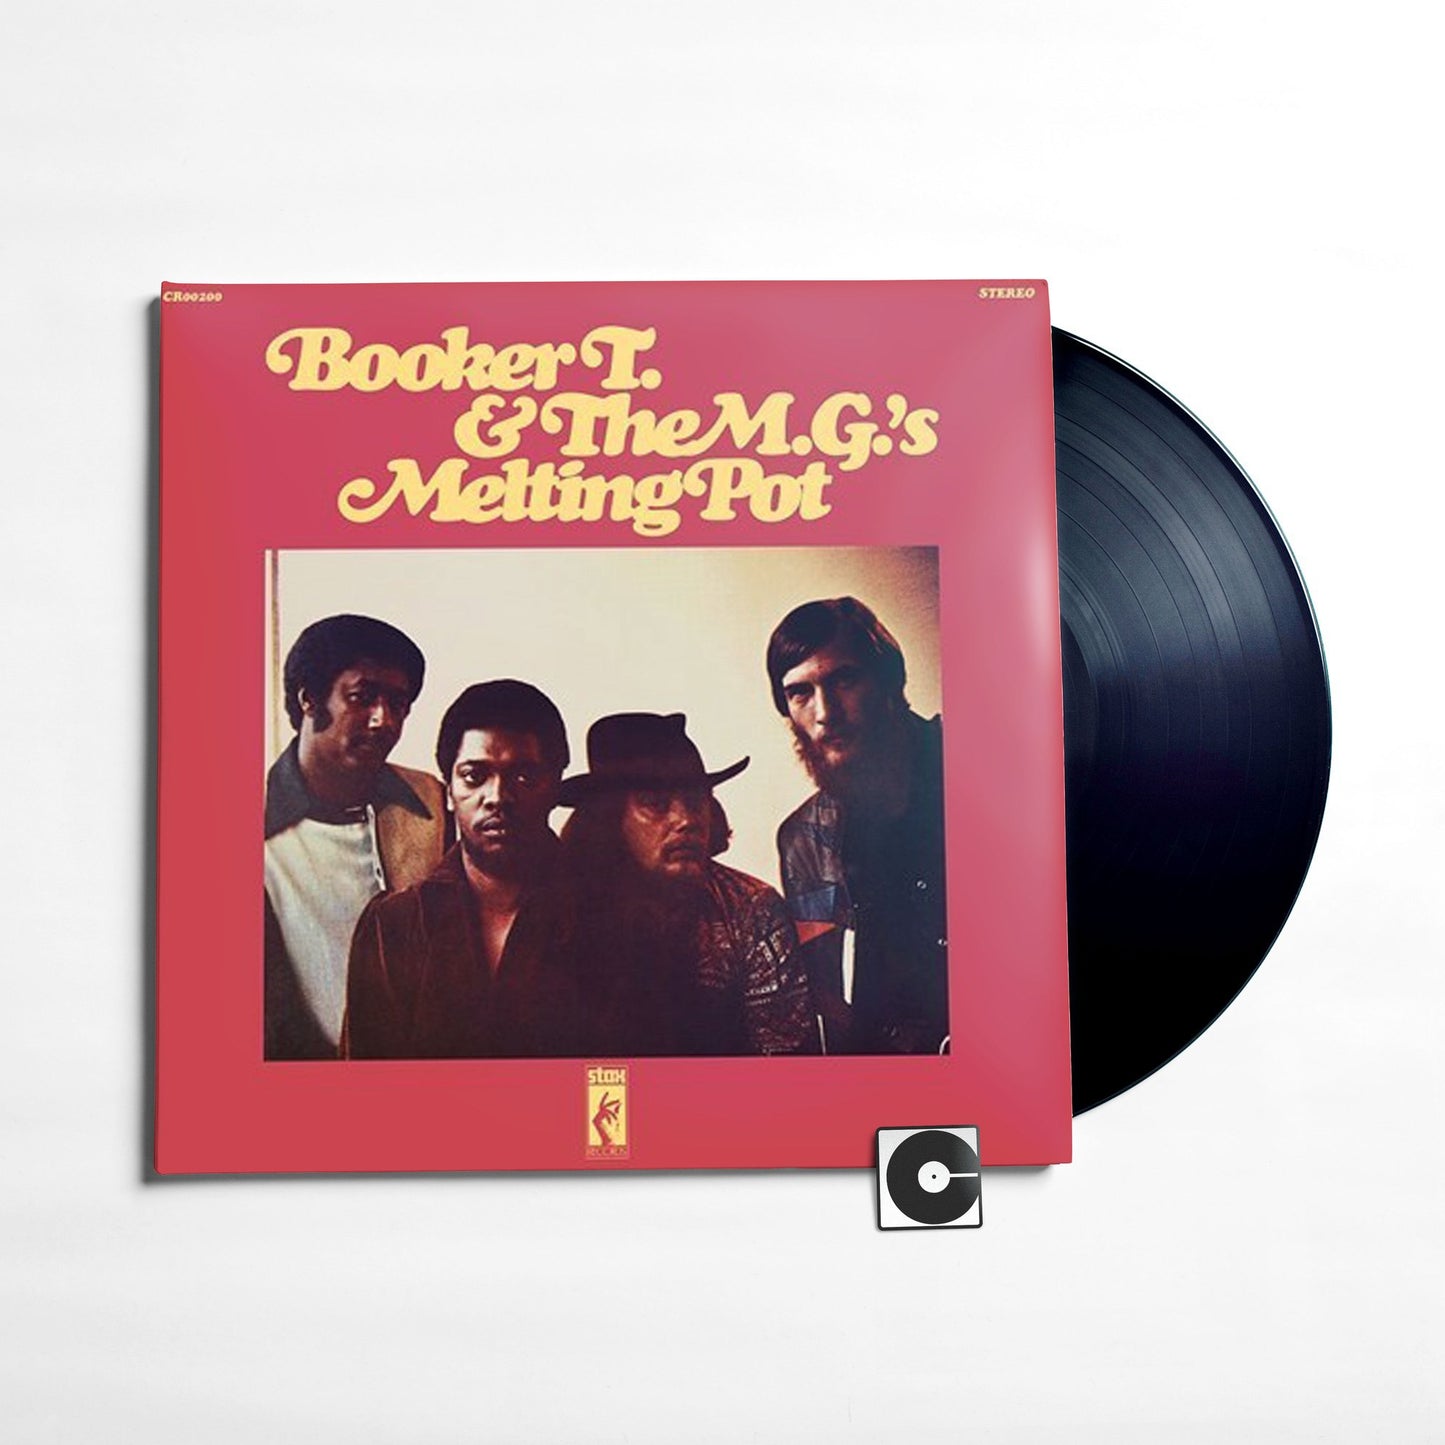 Booker T. & The M.G.'s - "Melting Pot"